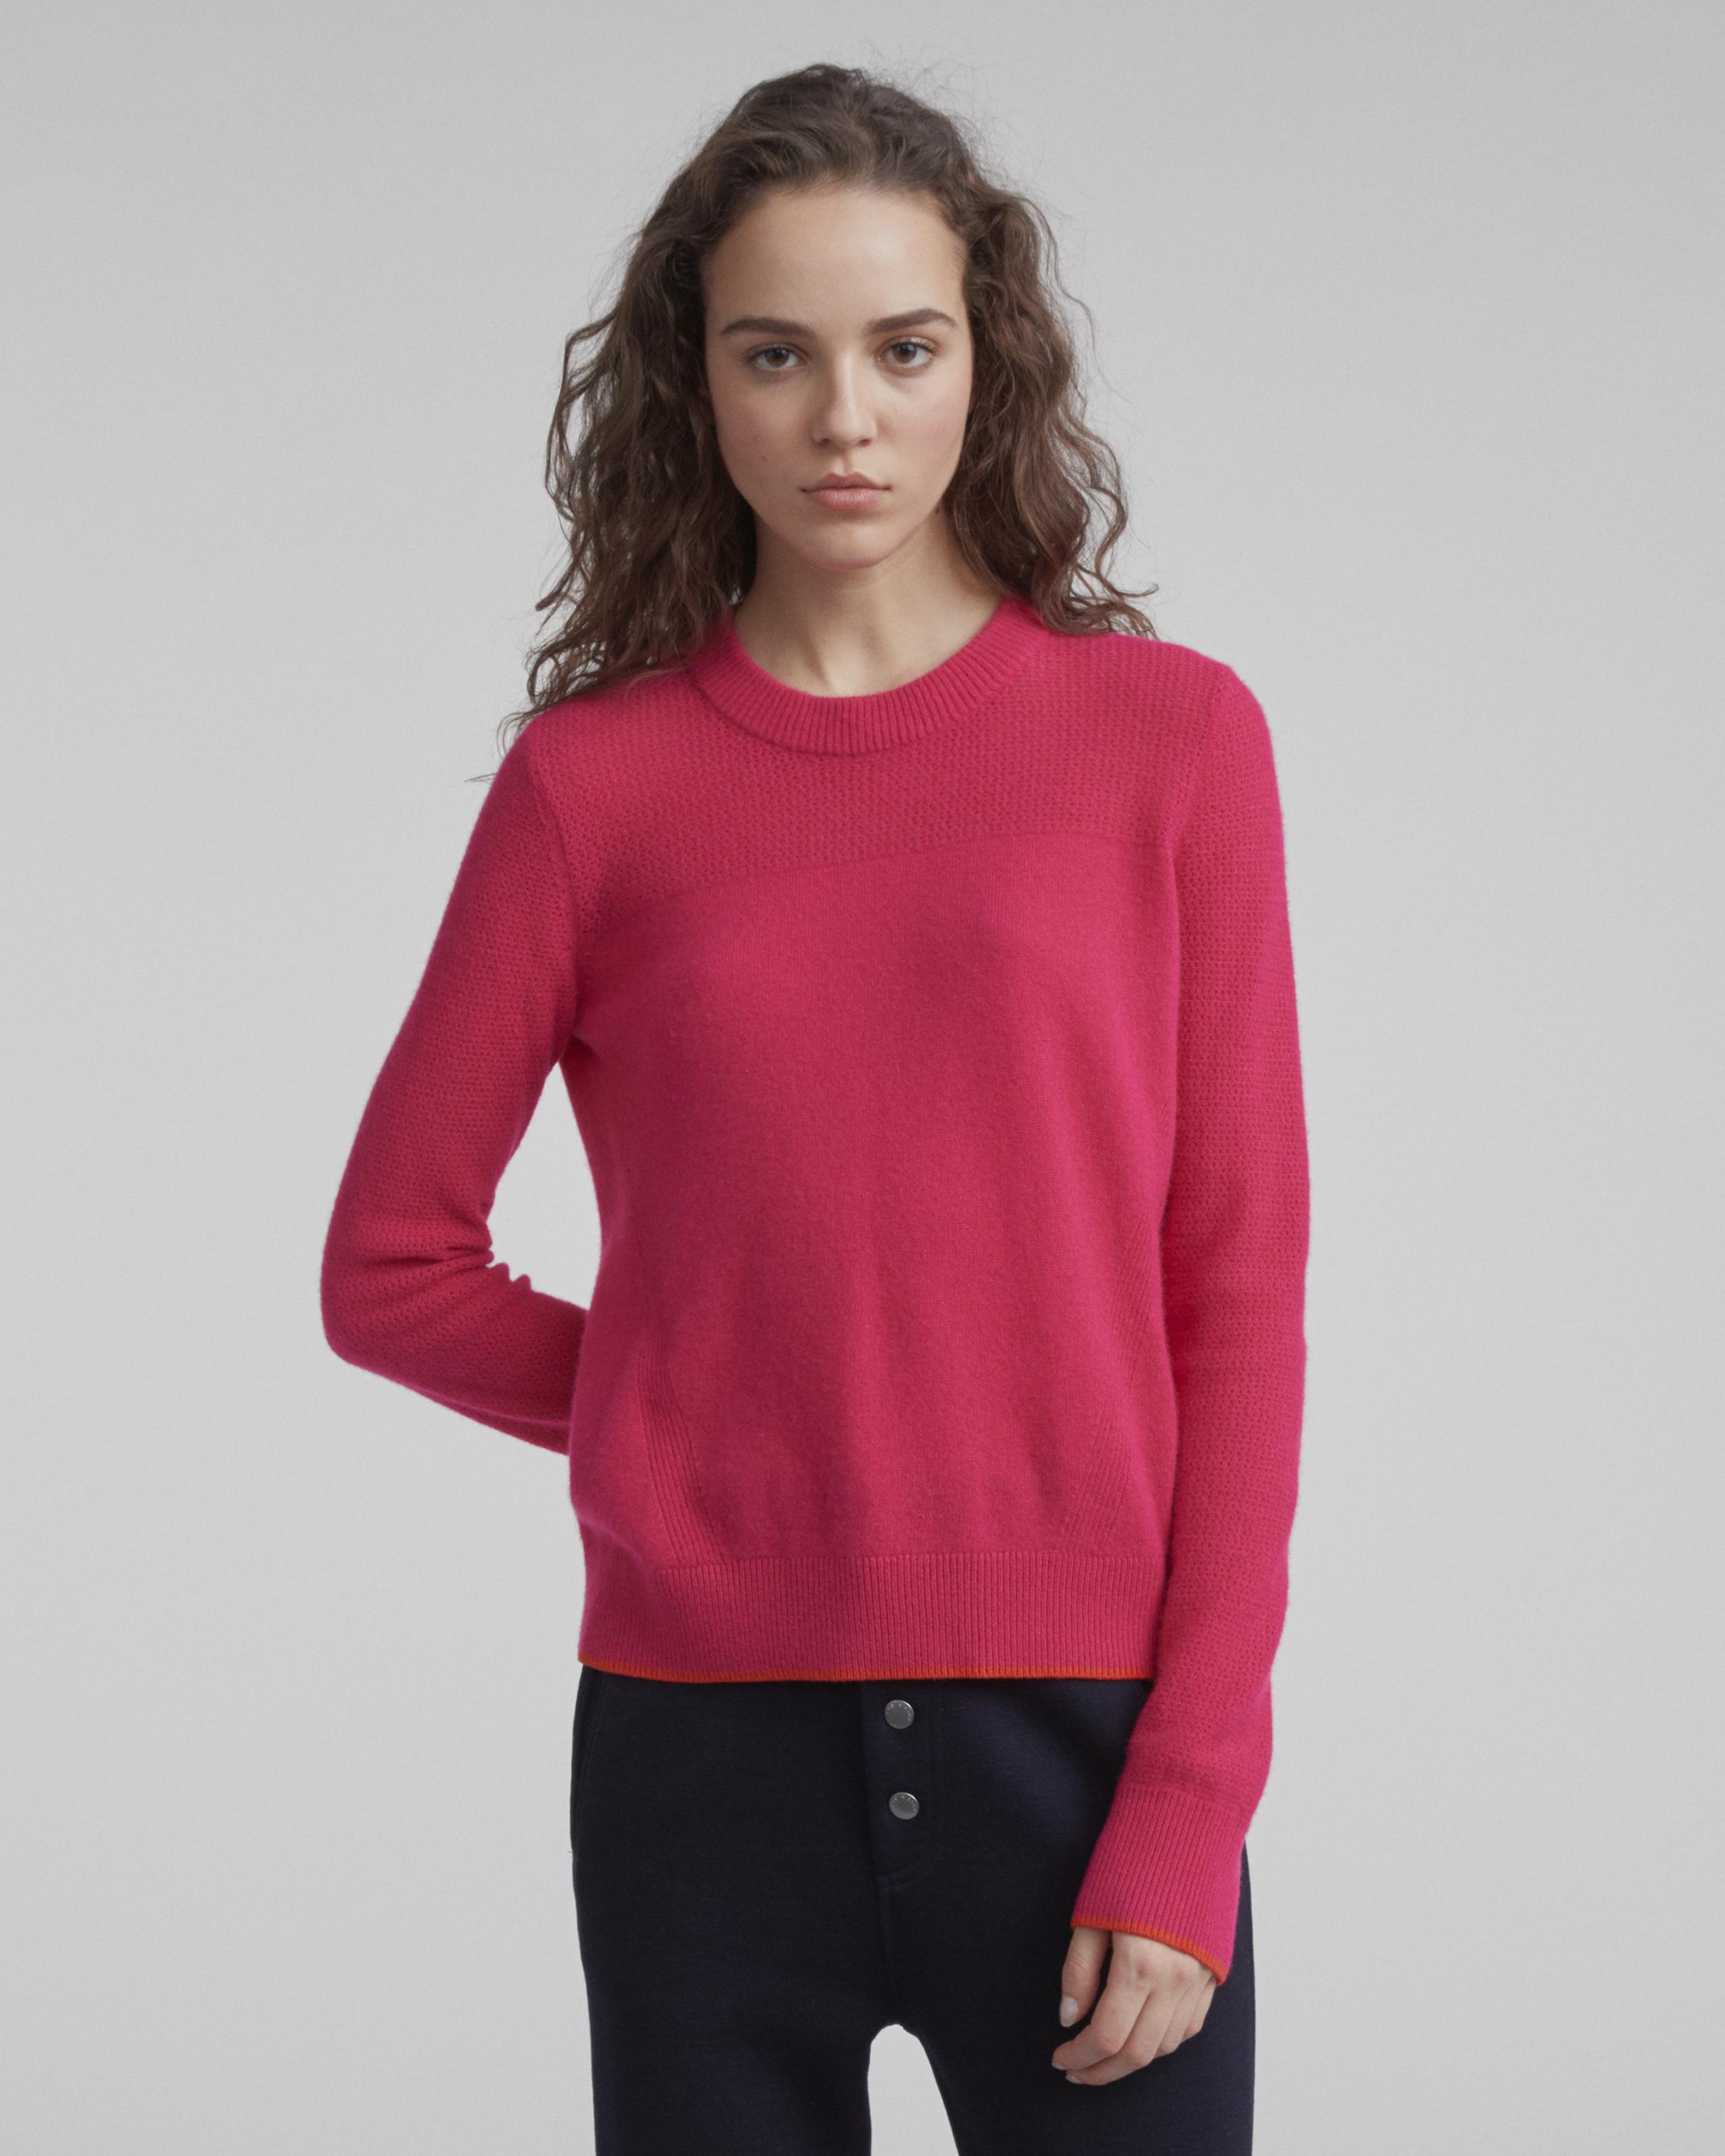 Sweaters, Sweatshirts & Cardigans in Cashmere, Wool & Knit| rag & bone